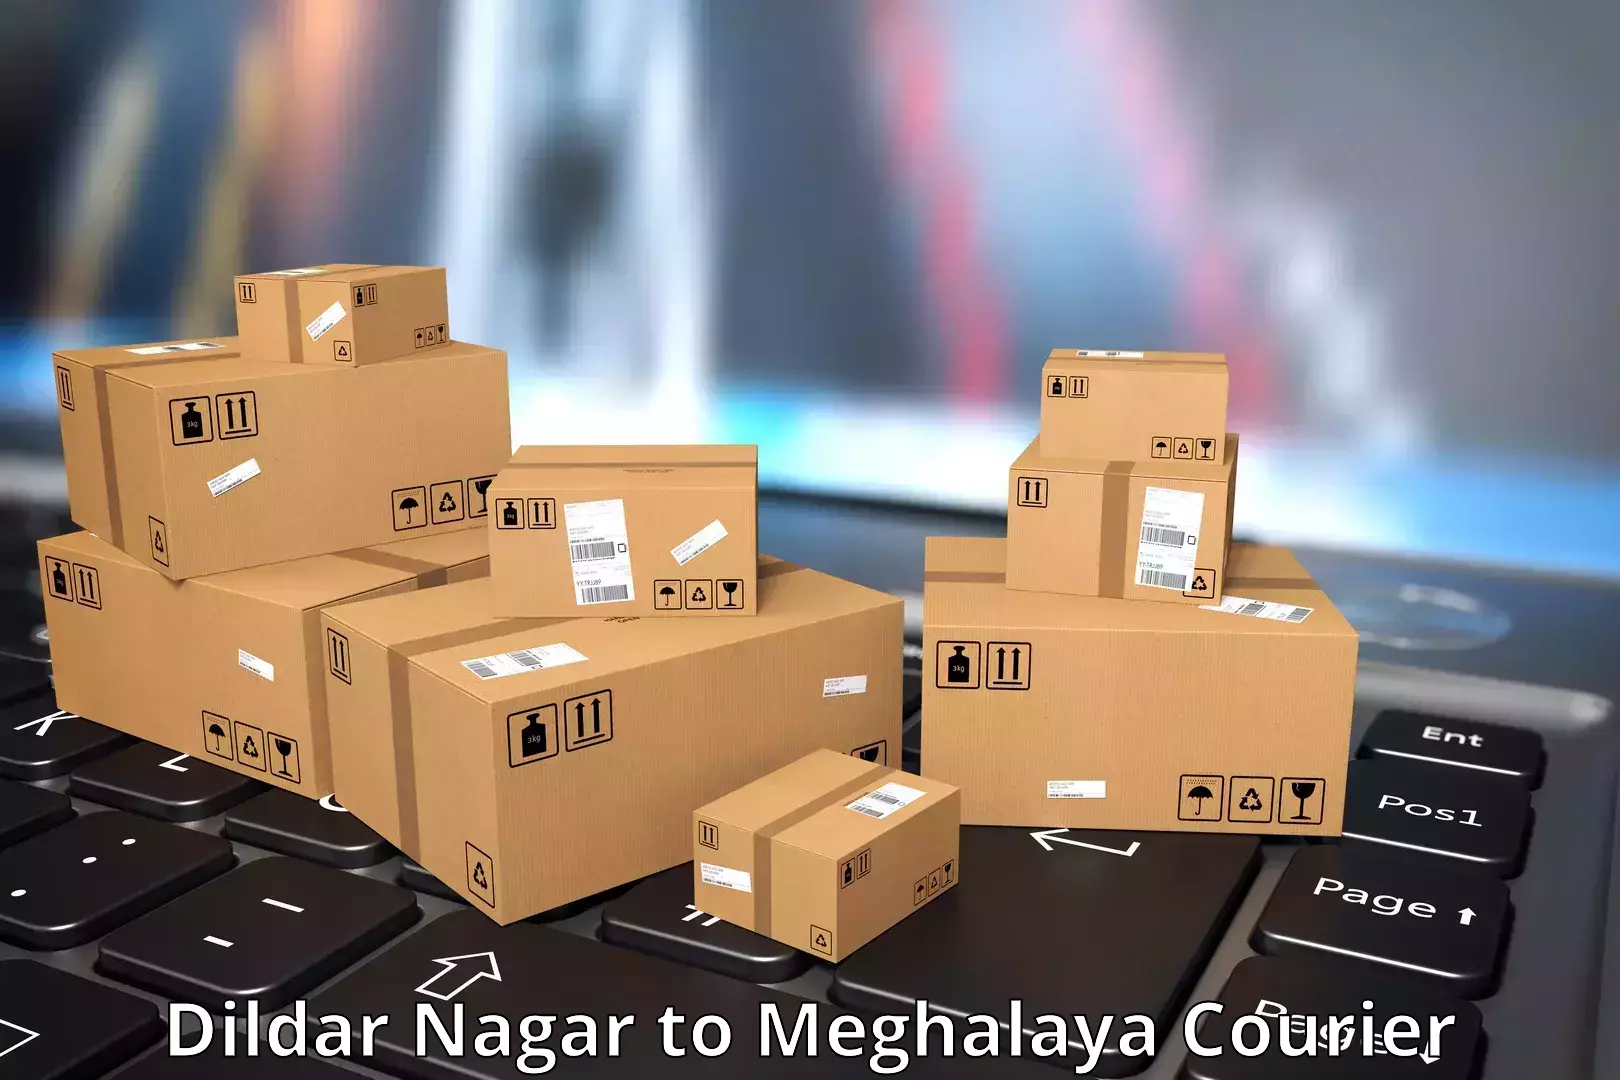 State-of-the-art courier technology Dildar Nagar to East Khasi Hills